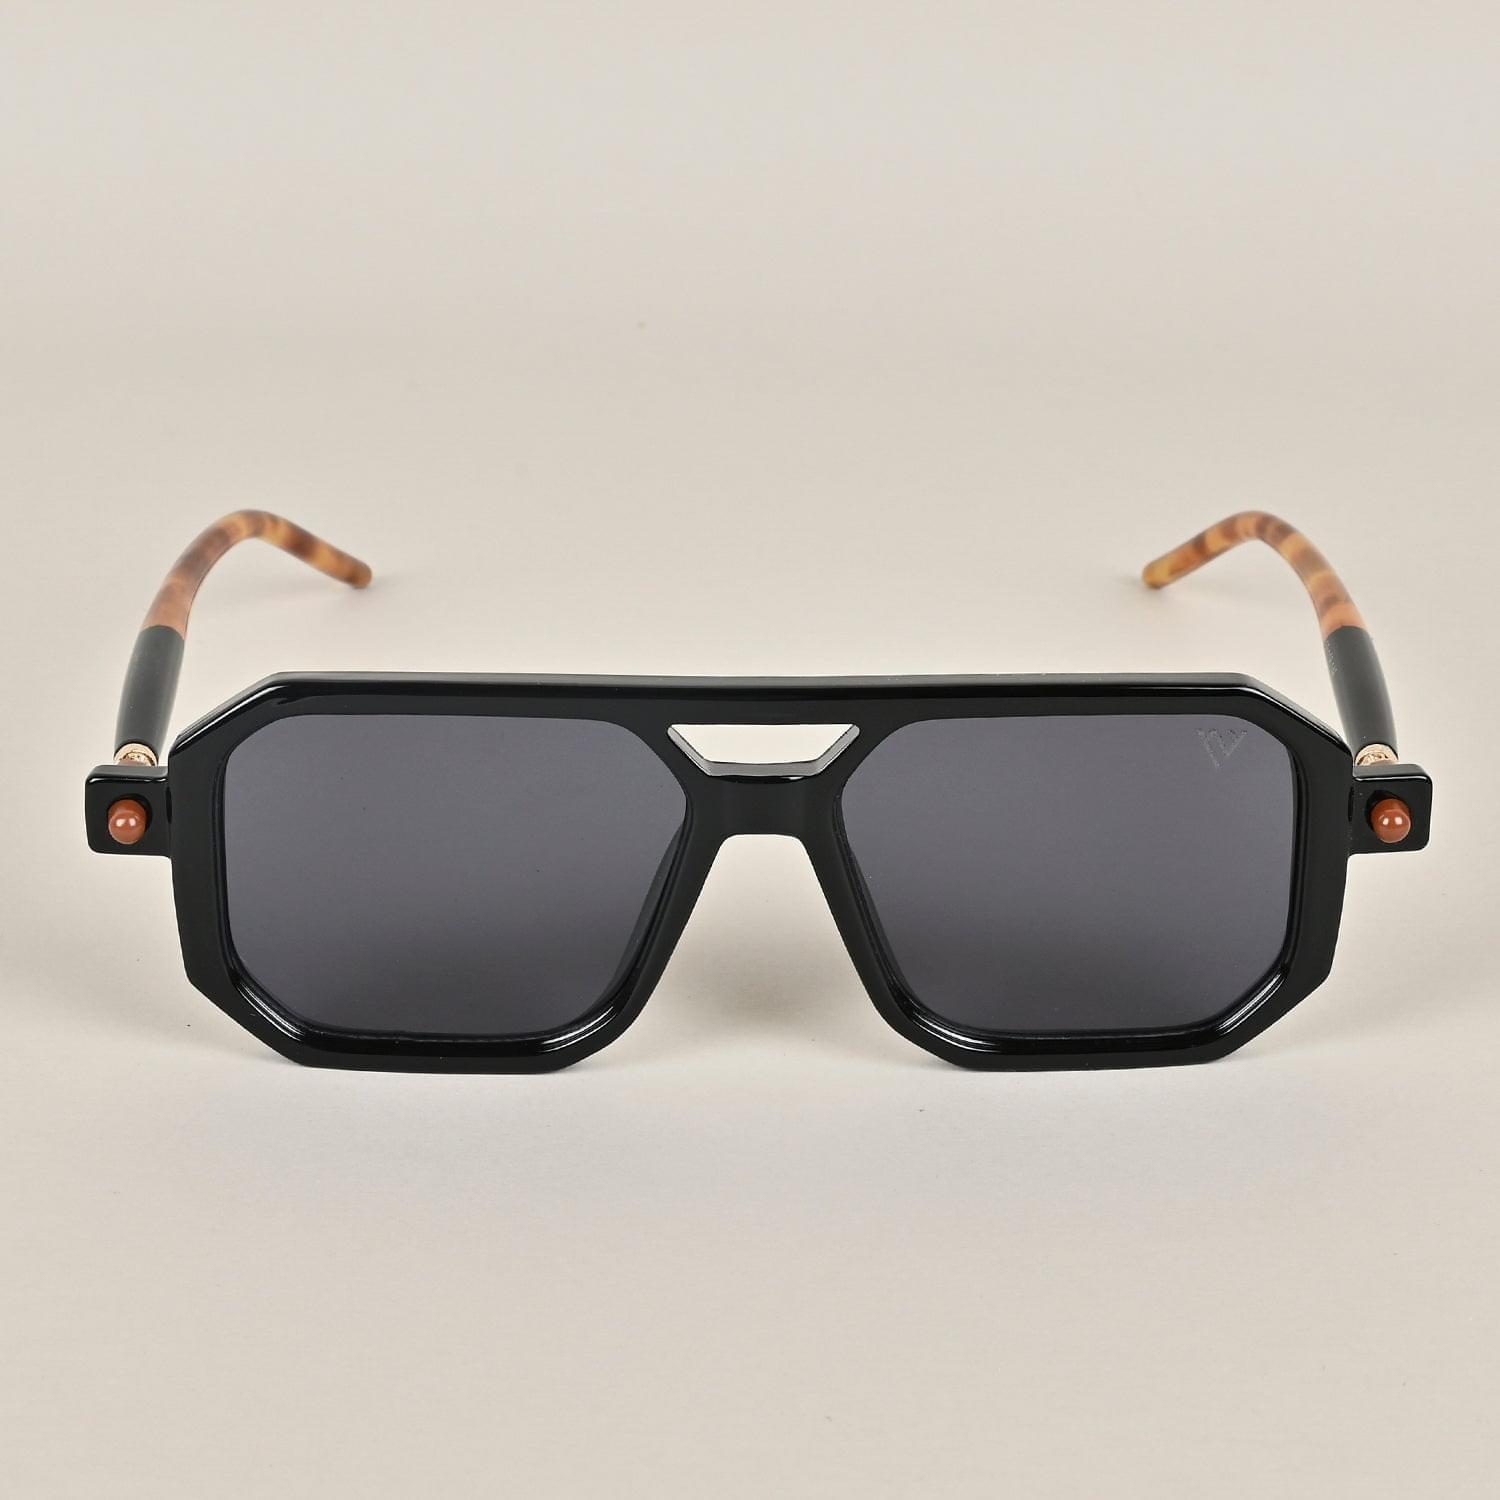 Voyage All Black Wayfarer Sunglasses - MG3646